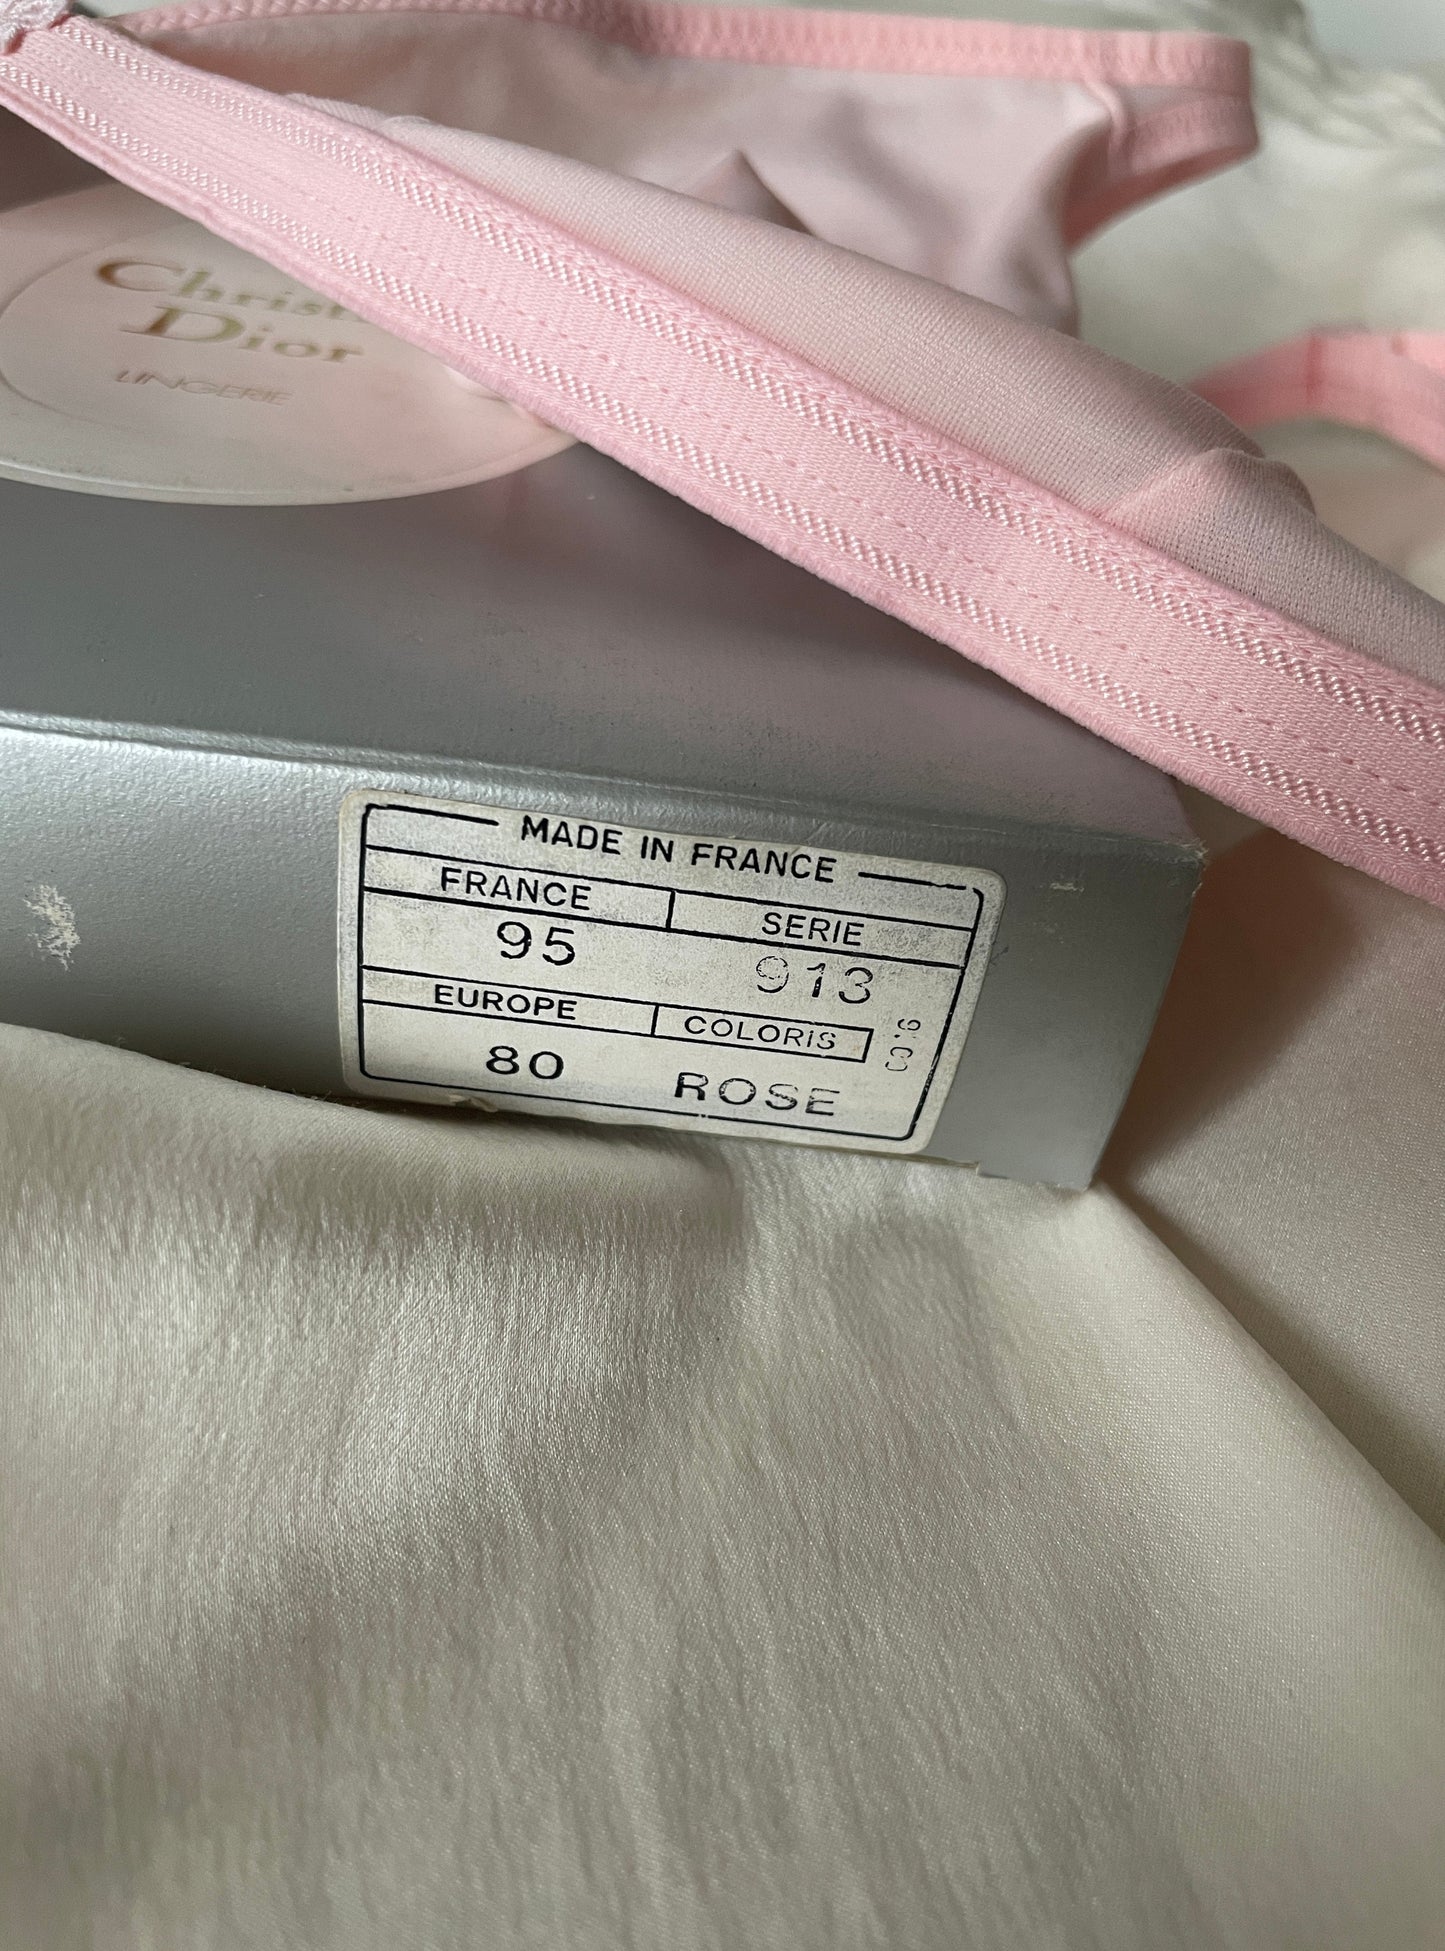 Christian Dior lace bralette lingerie (deadstock never worn)